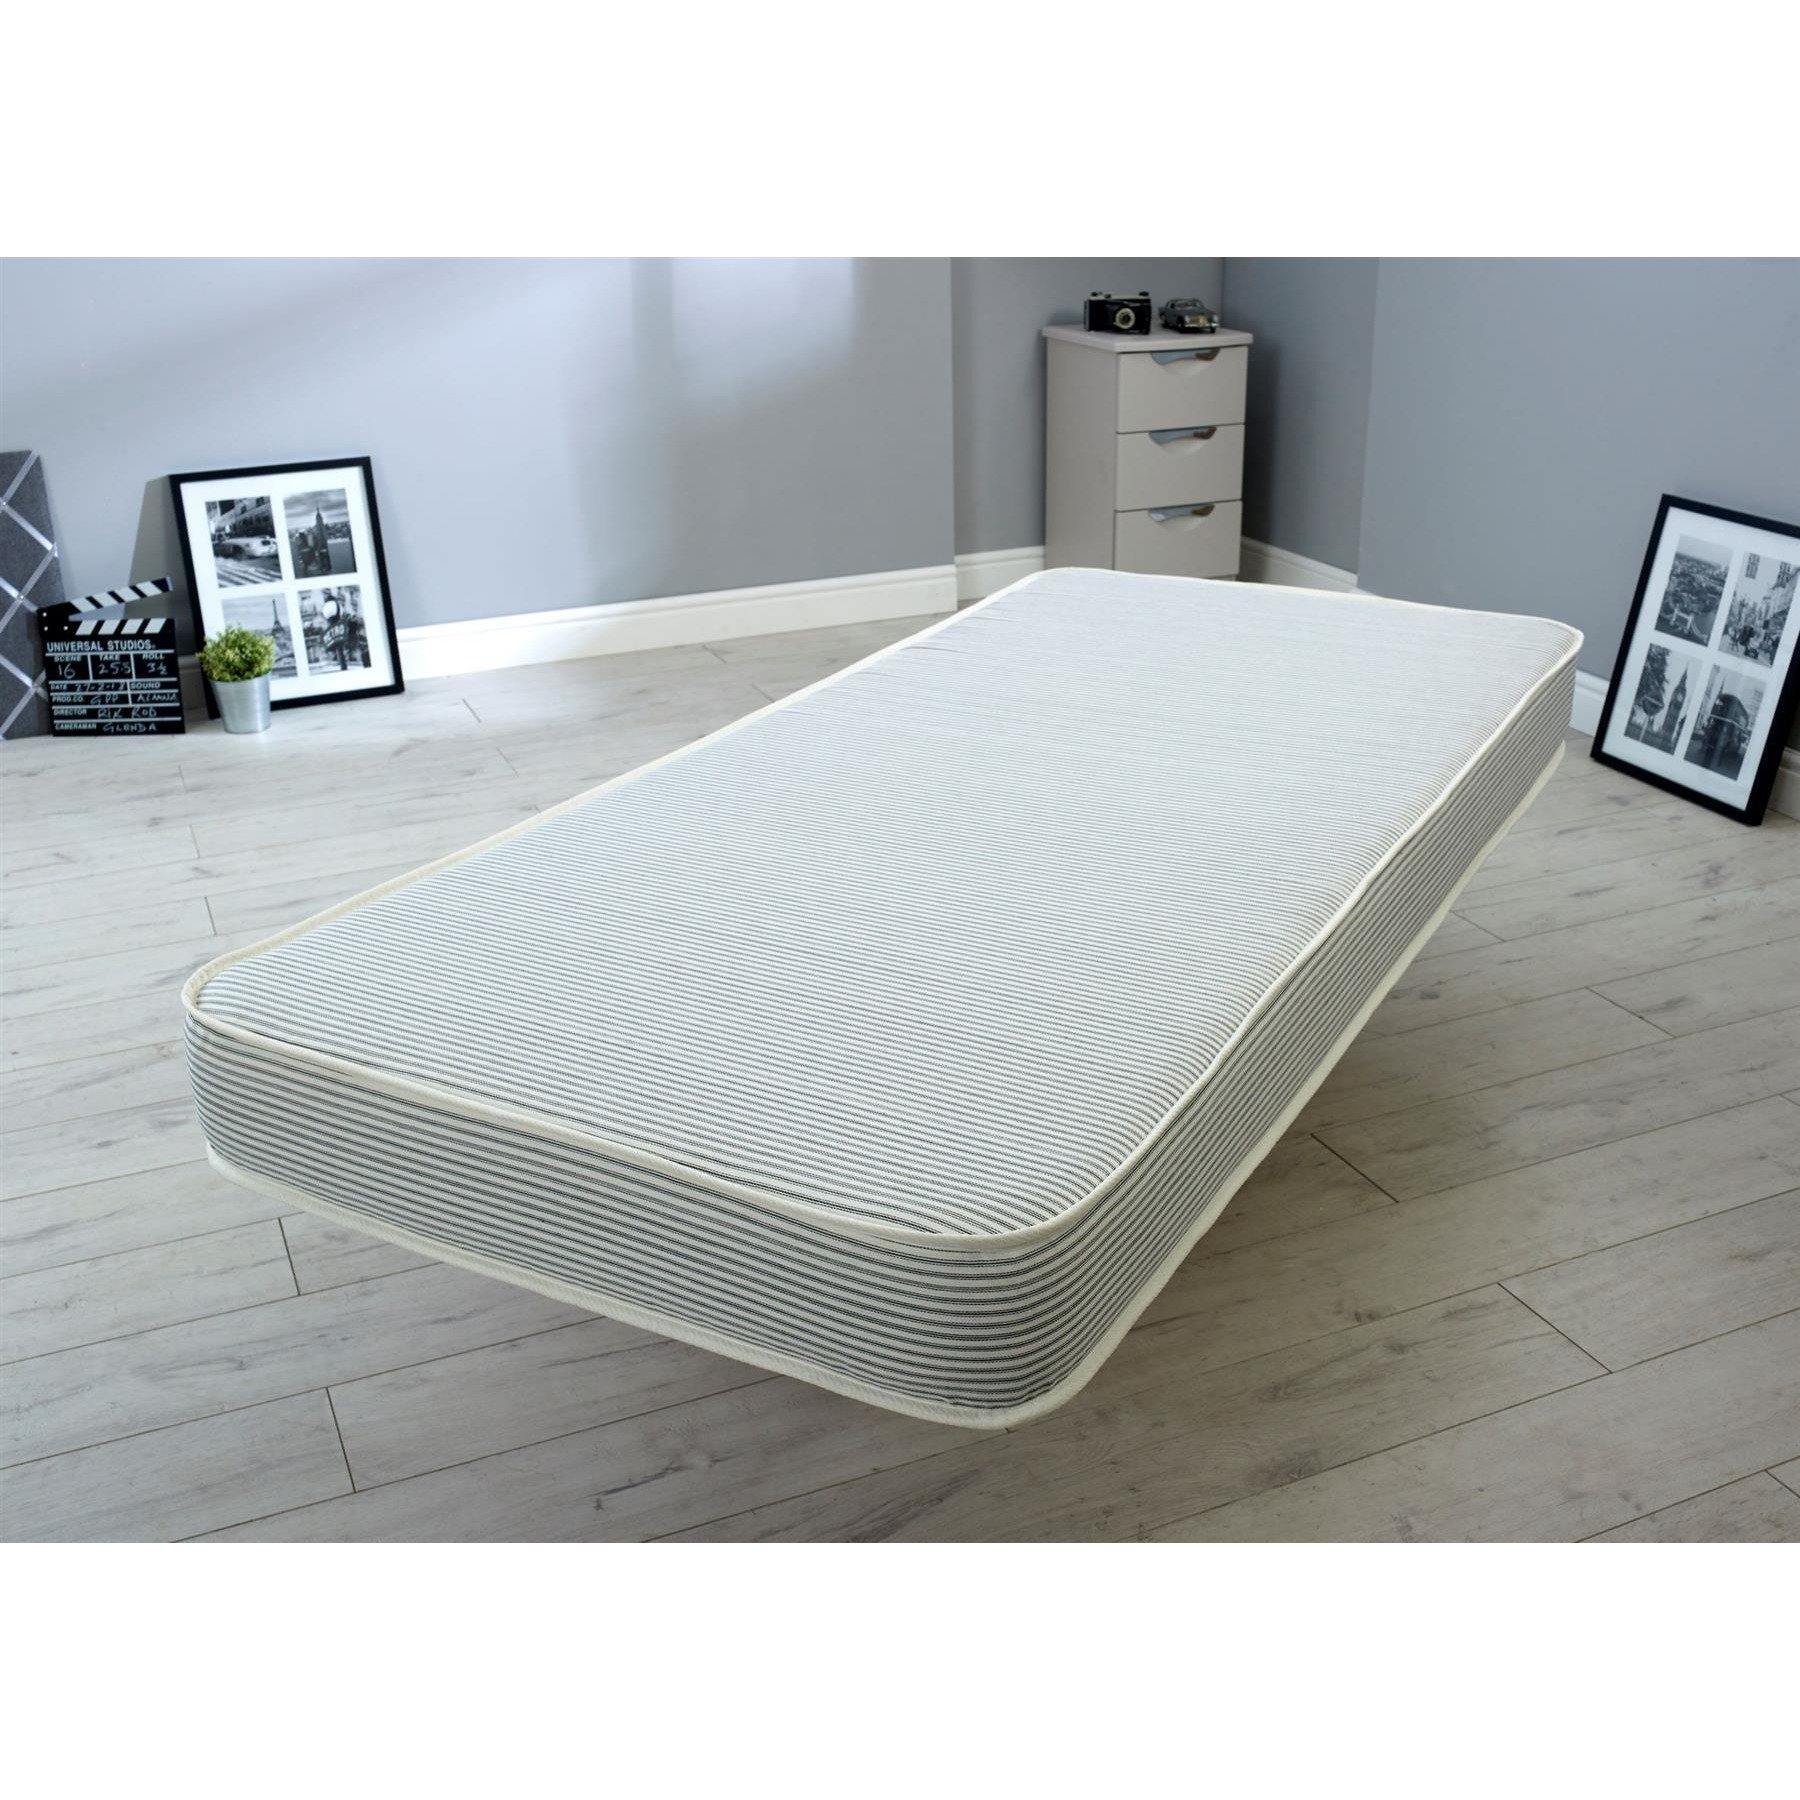 Starlight Beds Atlas Stamford Stripe Dual Sided 7" Inch All Foam No Spring Reflex Foam Mattress - Starlight Beds™